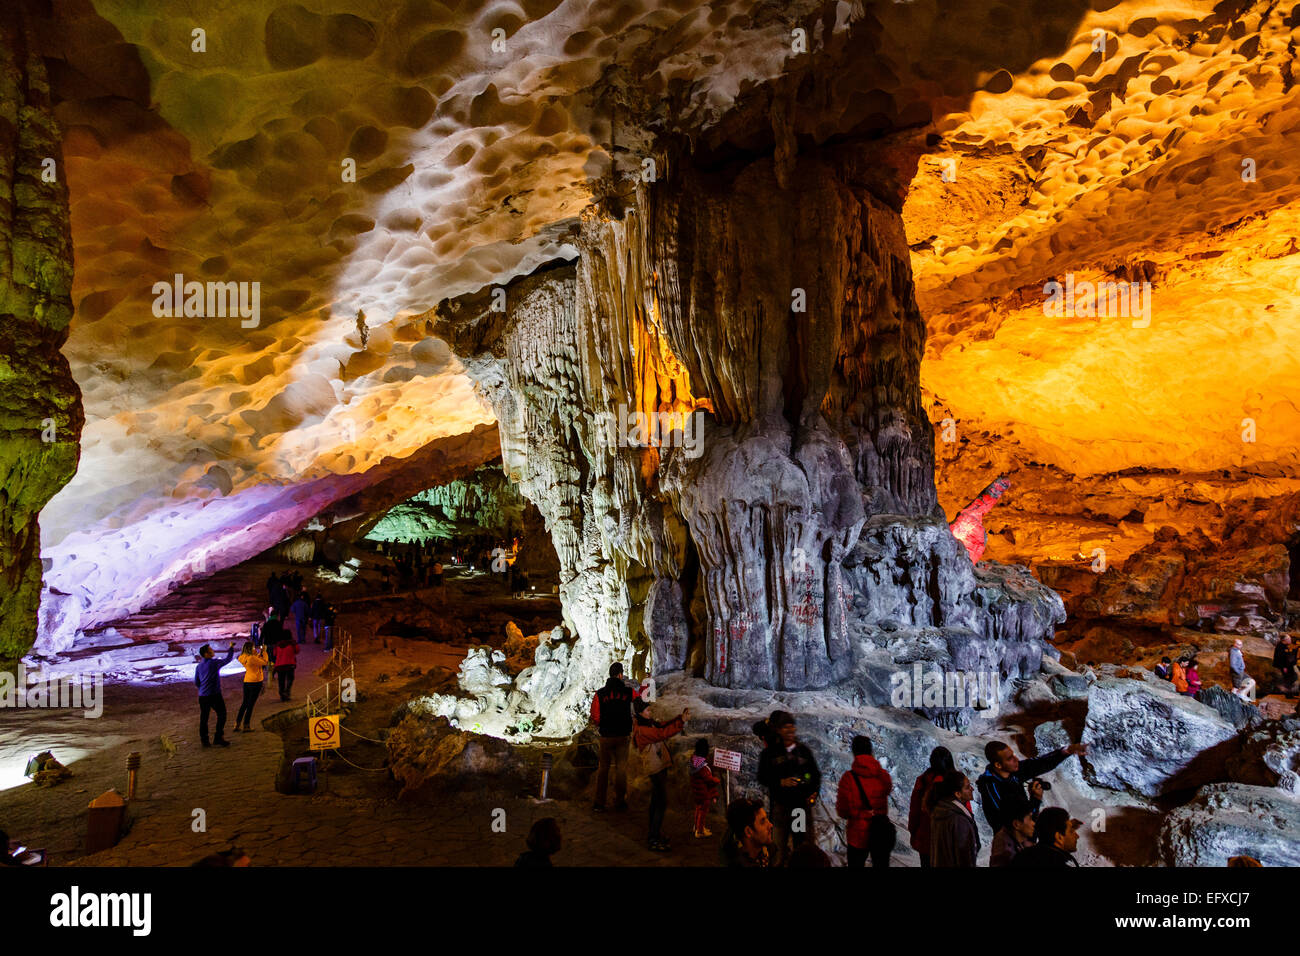 Sung Sot Cave, Halong Bay, Vietnam. Foto Stock